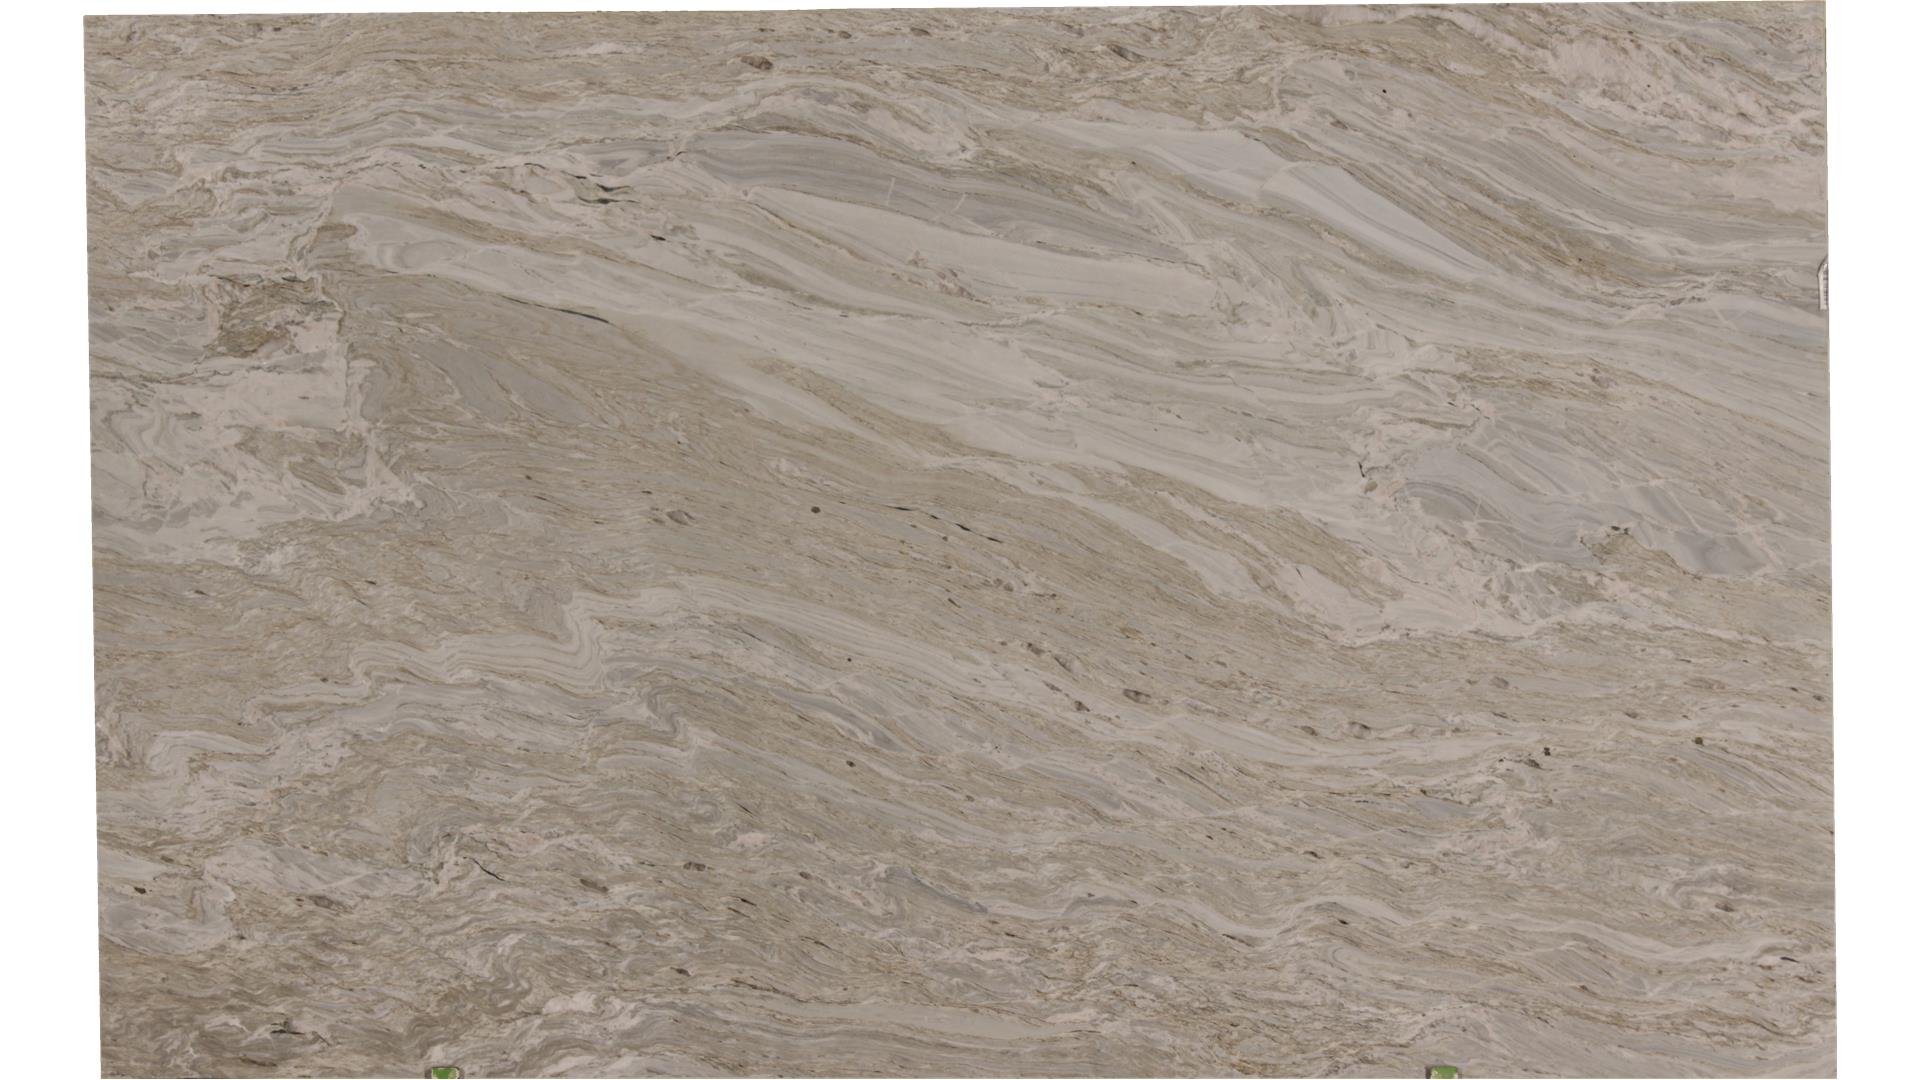 Avalanche Veincut (P) Granite Slabs